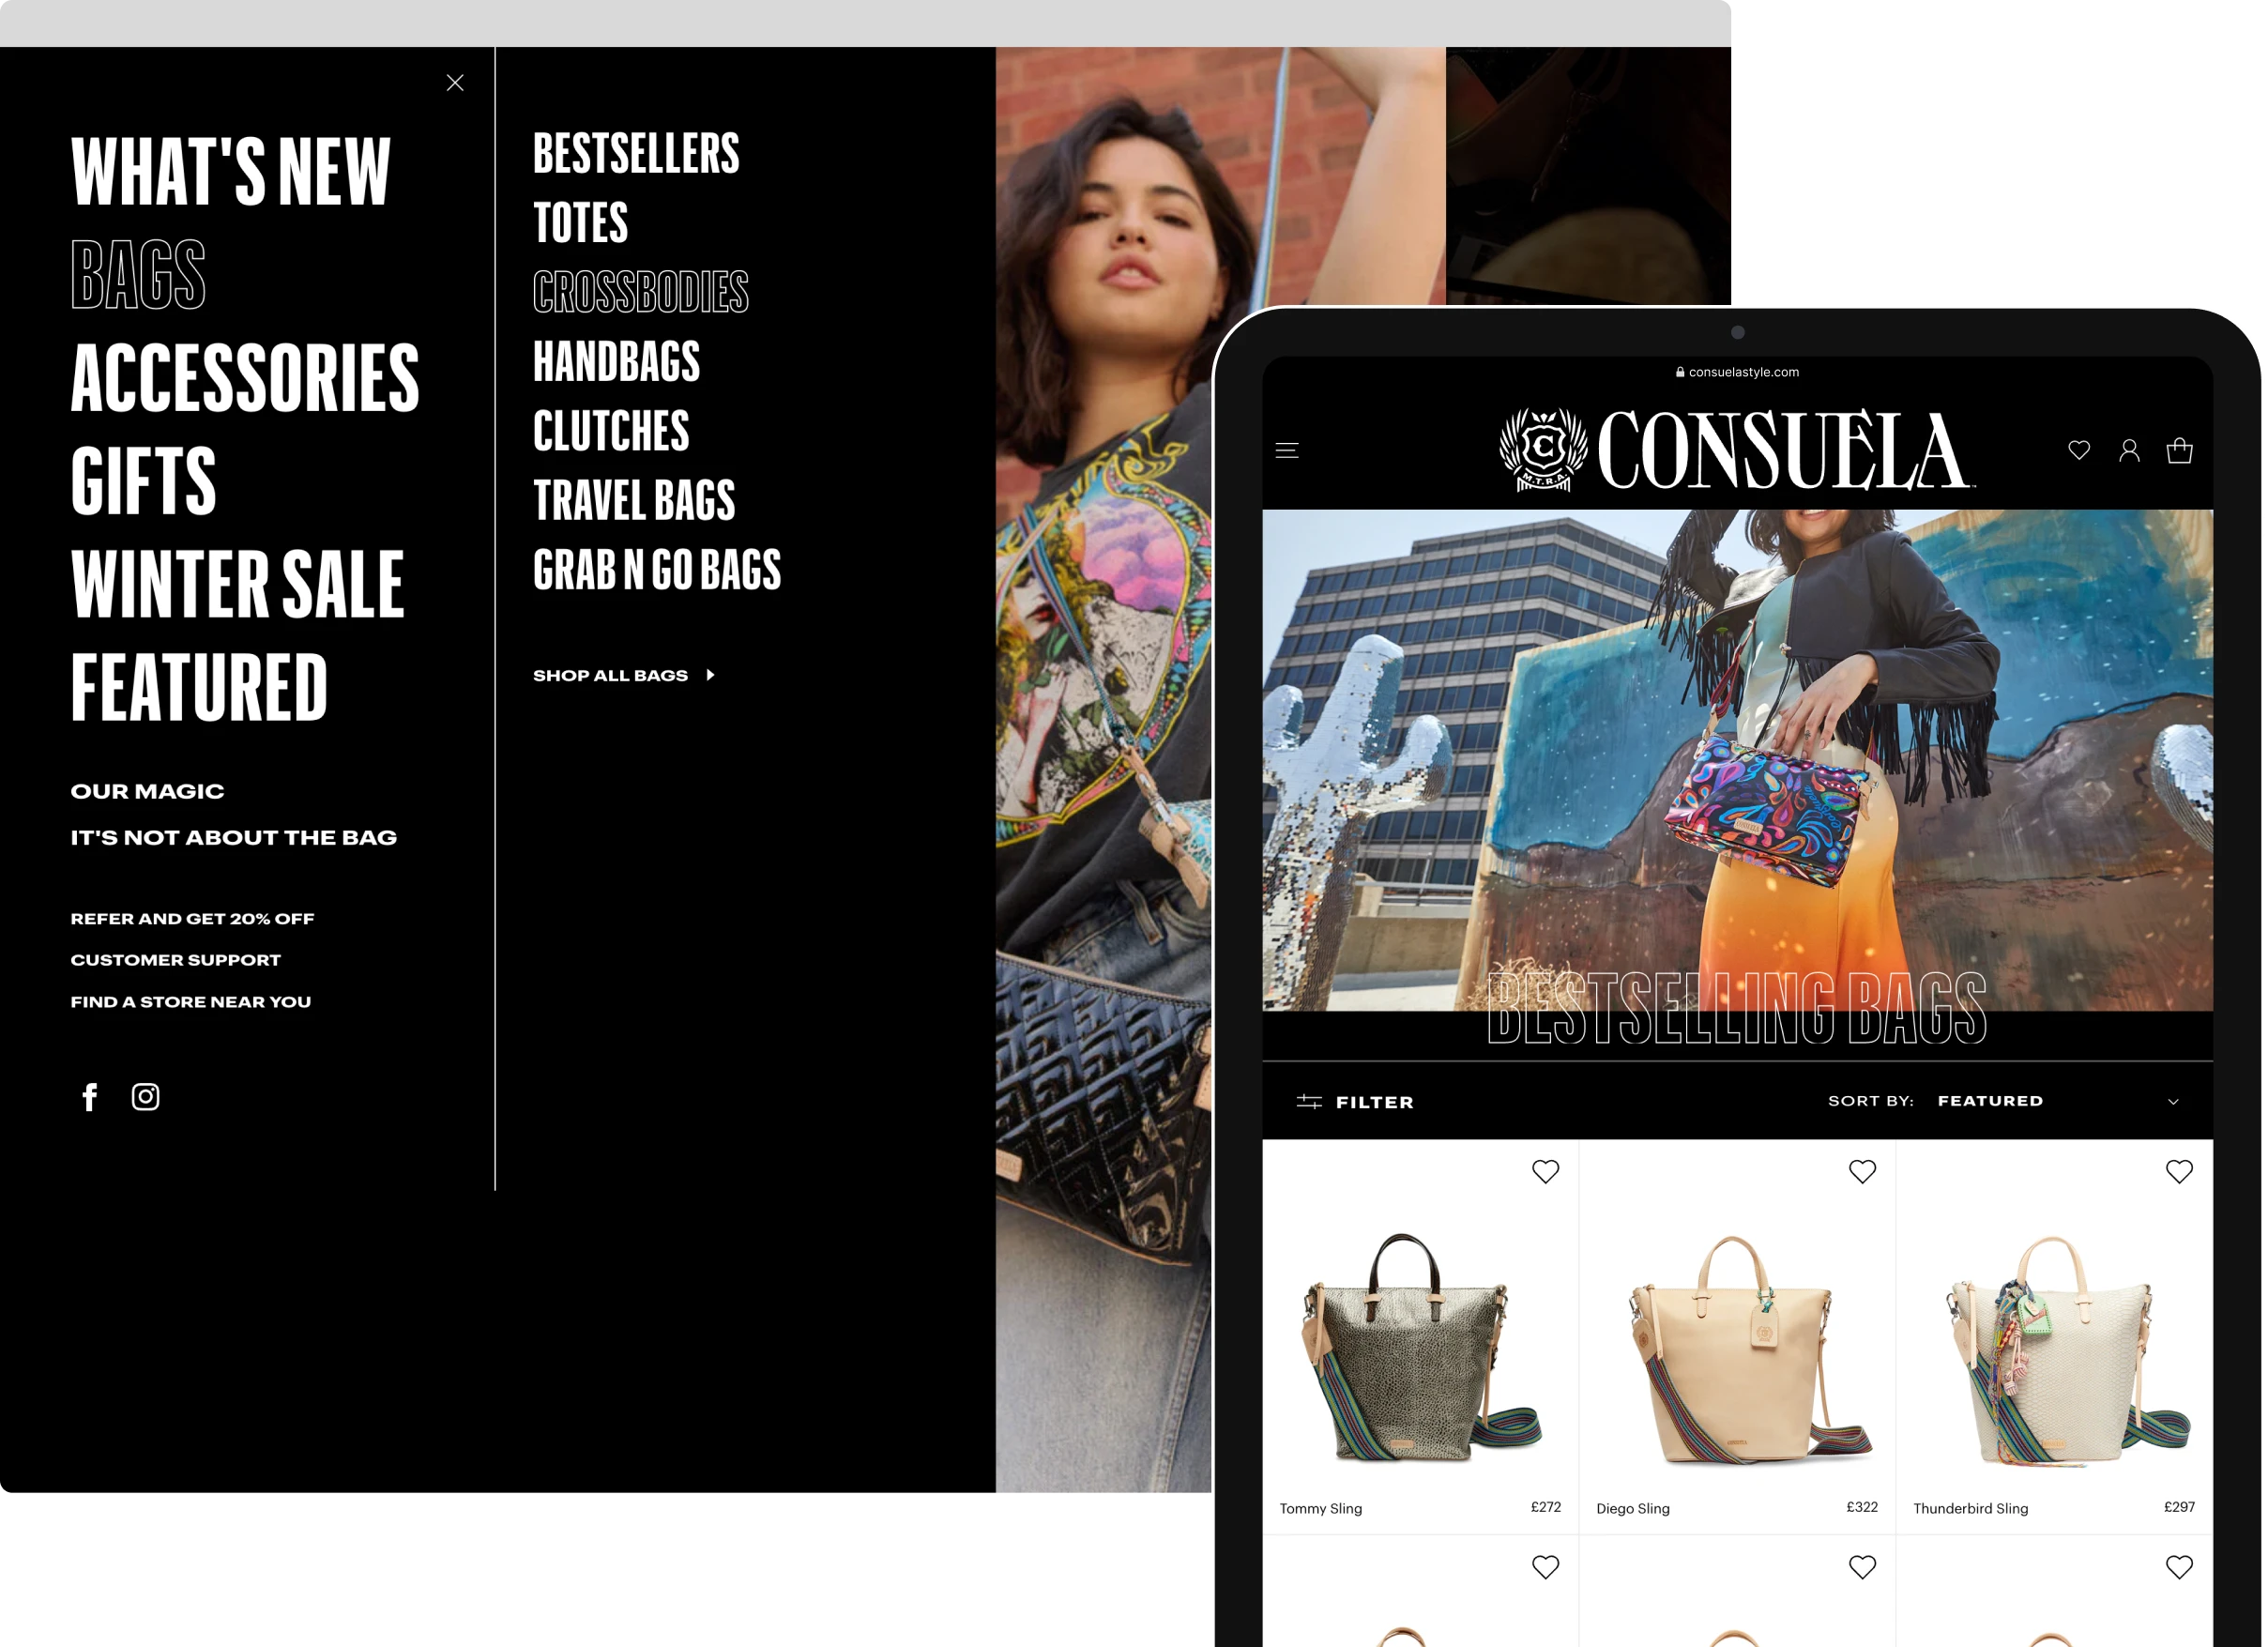 Screenshots of the Consuela website